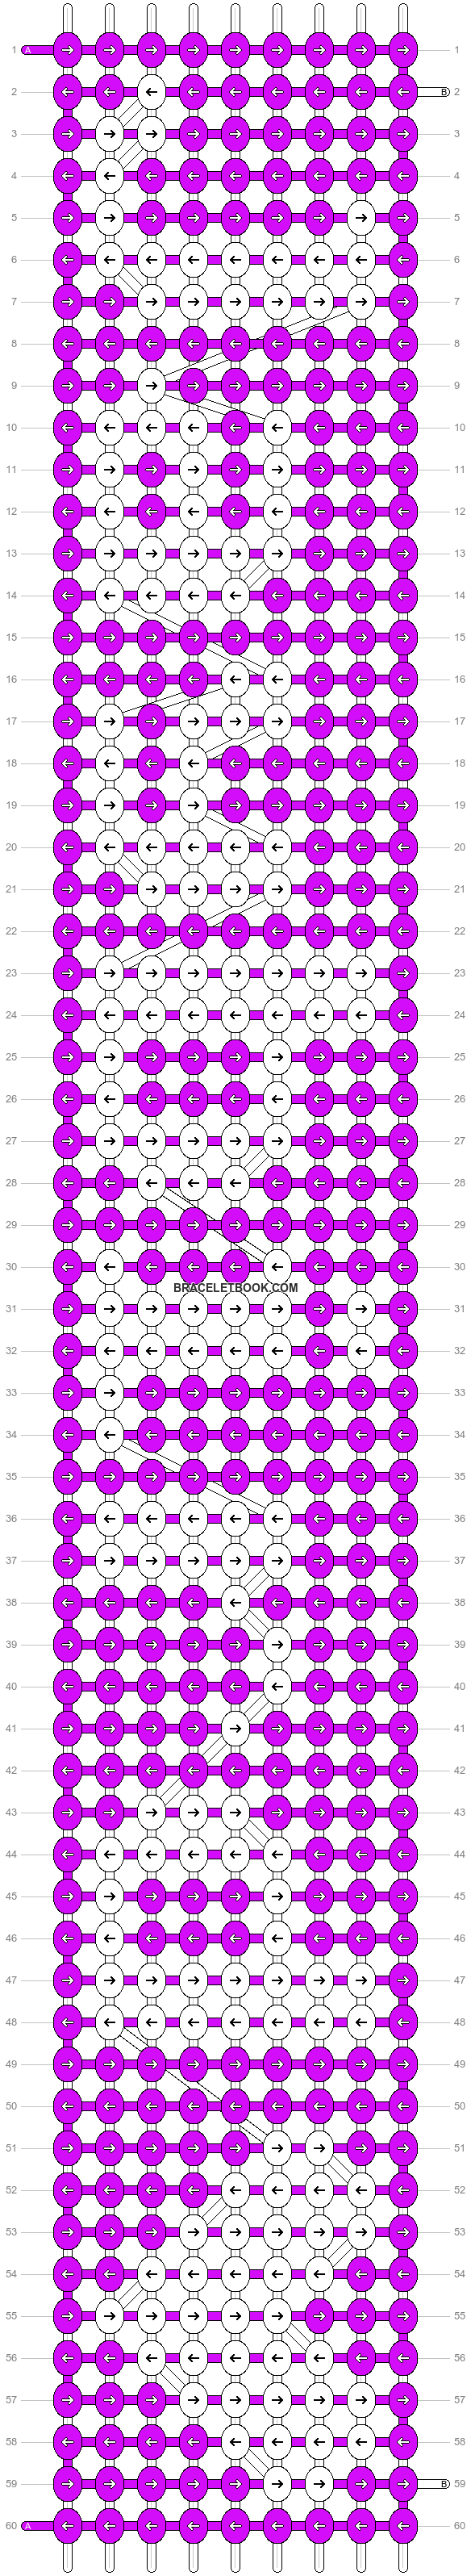 Alpha pattern #7145 pattern